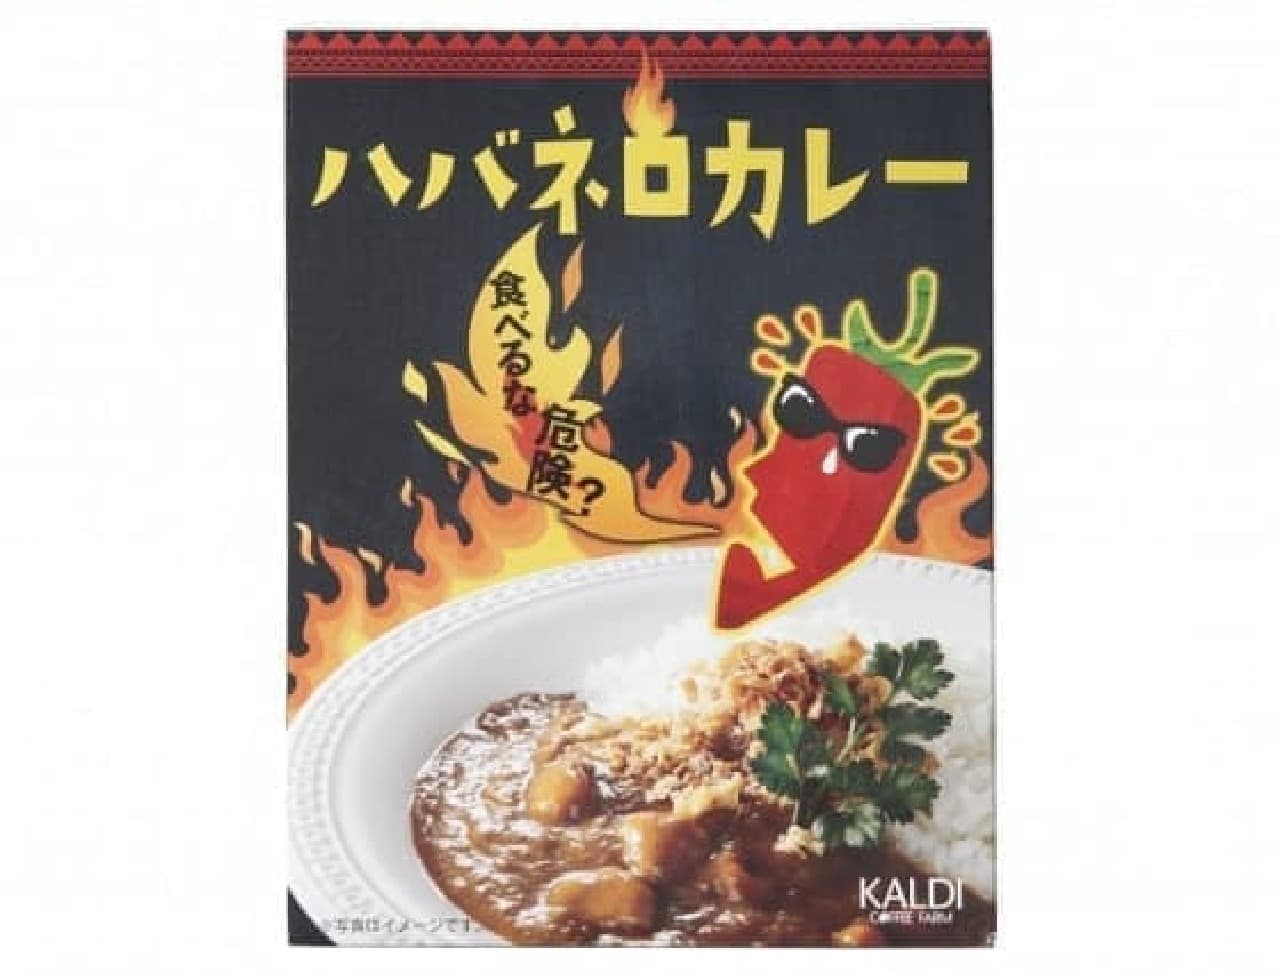 KALDI Coffee Farm "Original Danger of Eating? Habanero Curry"